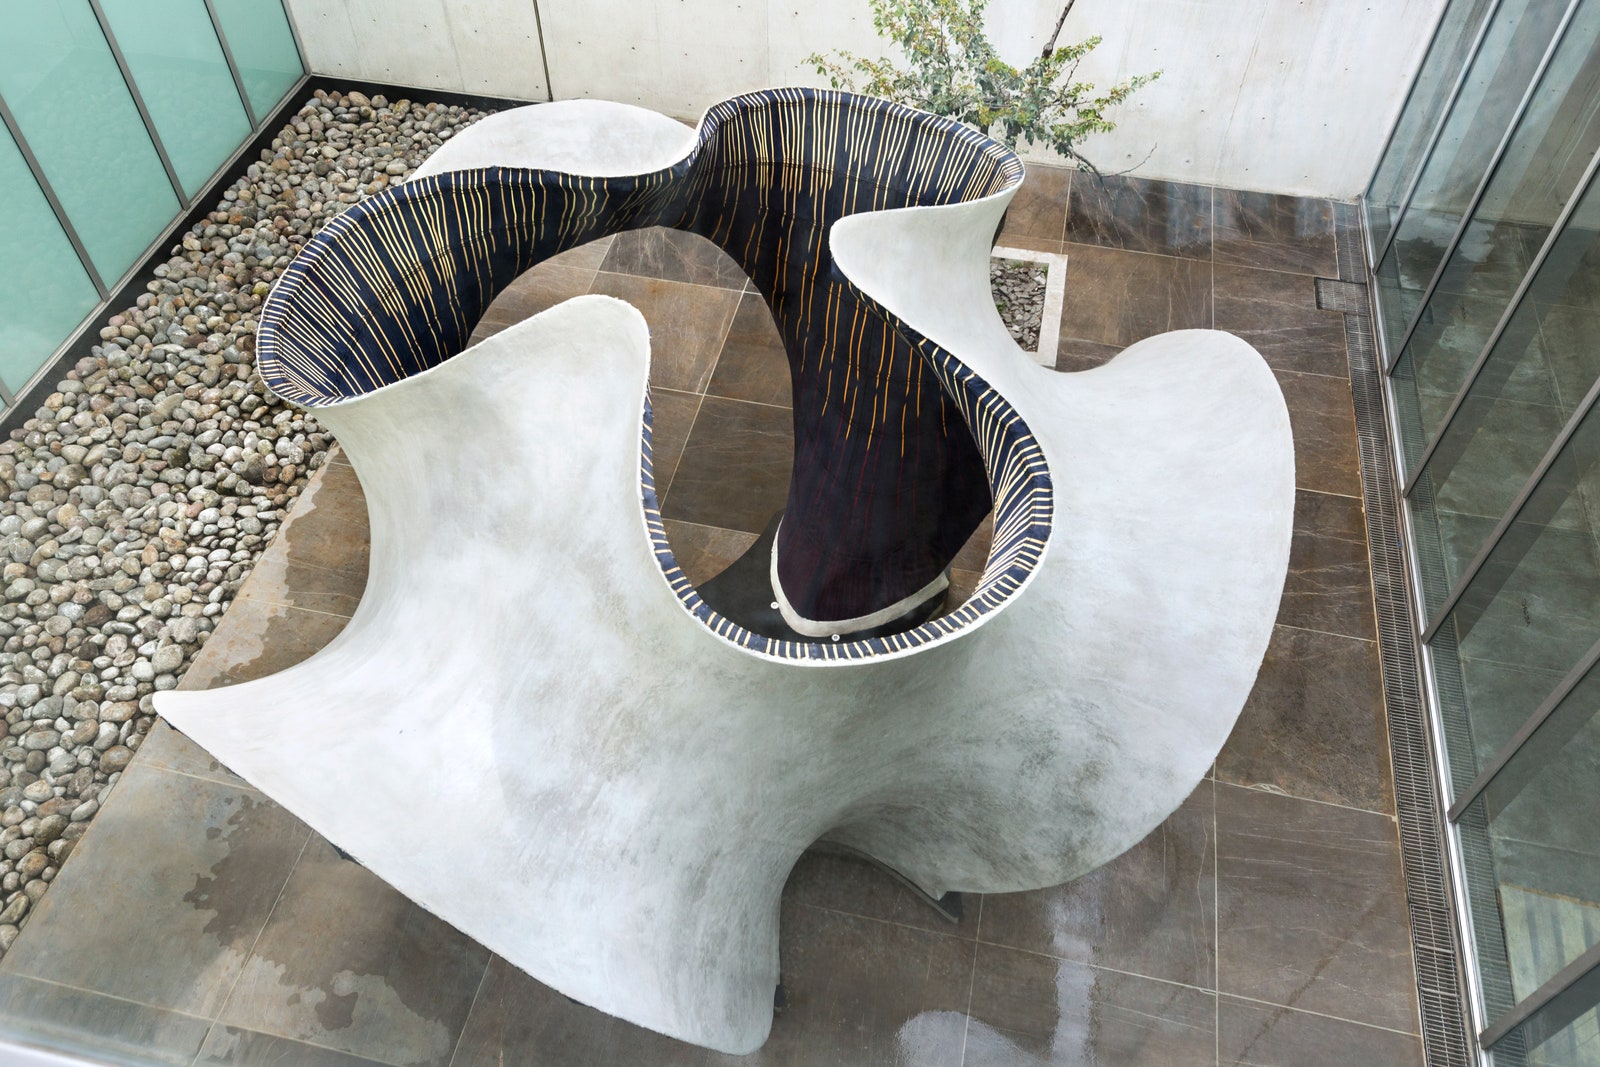 Бетонный павильон Zaha Hadid Architects в Мексике